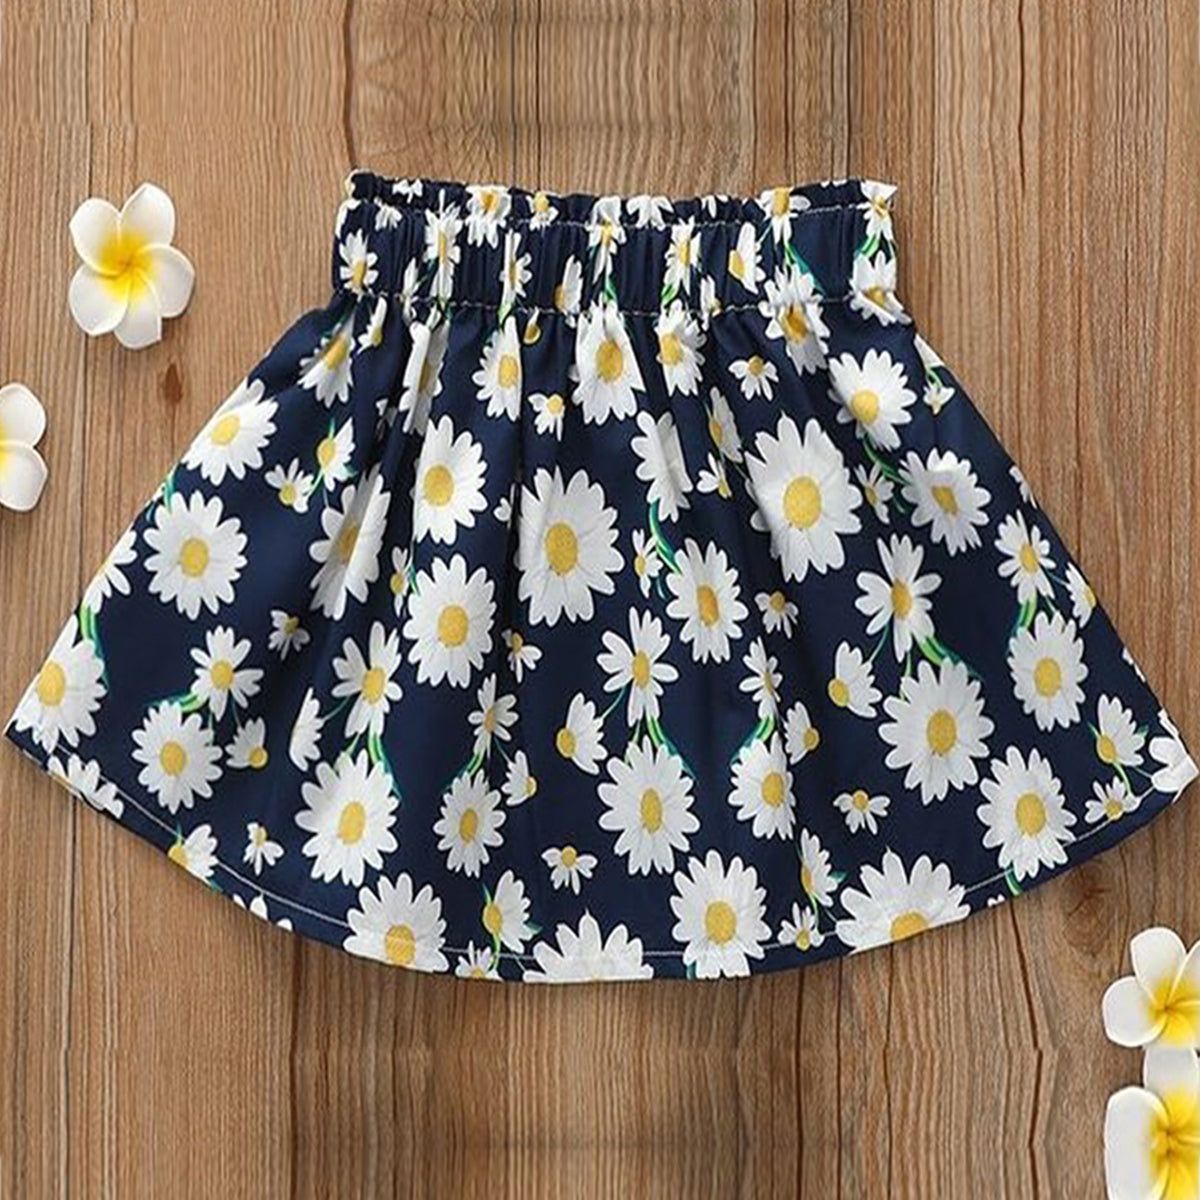 Venutaloza Toddler Girls Floral Print Elastic Waist Skirt.,